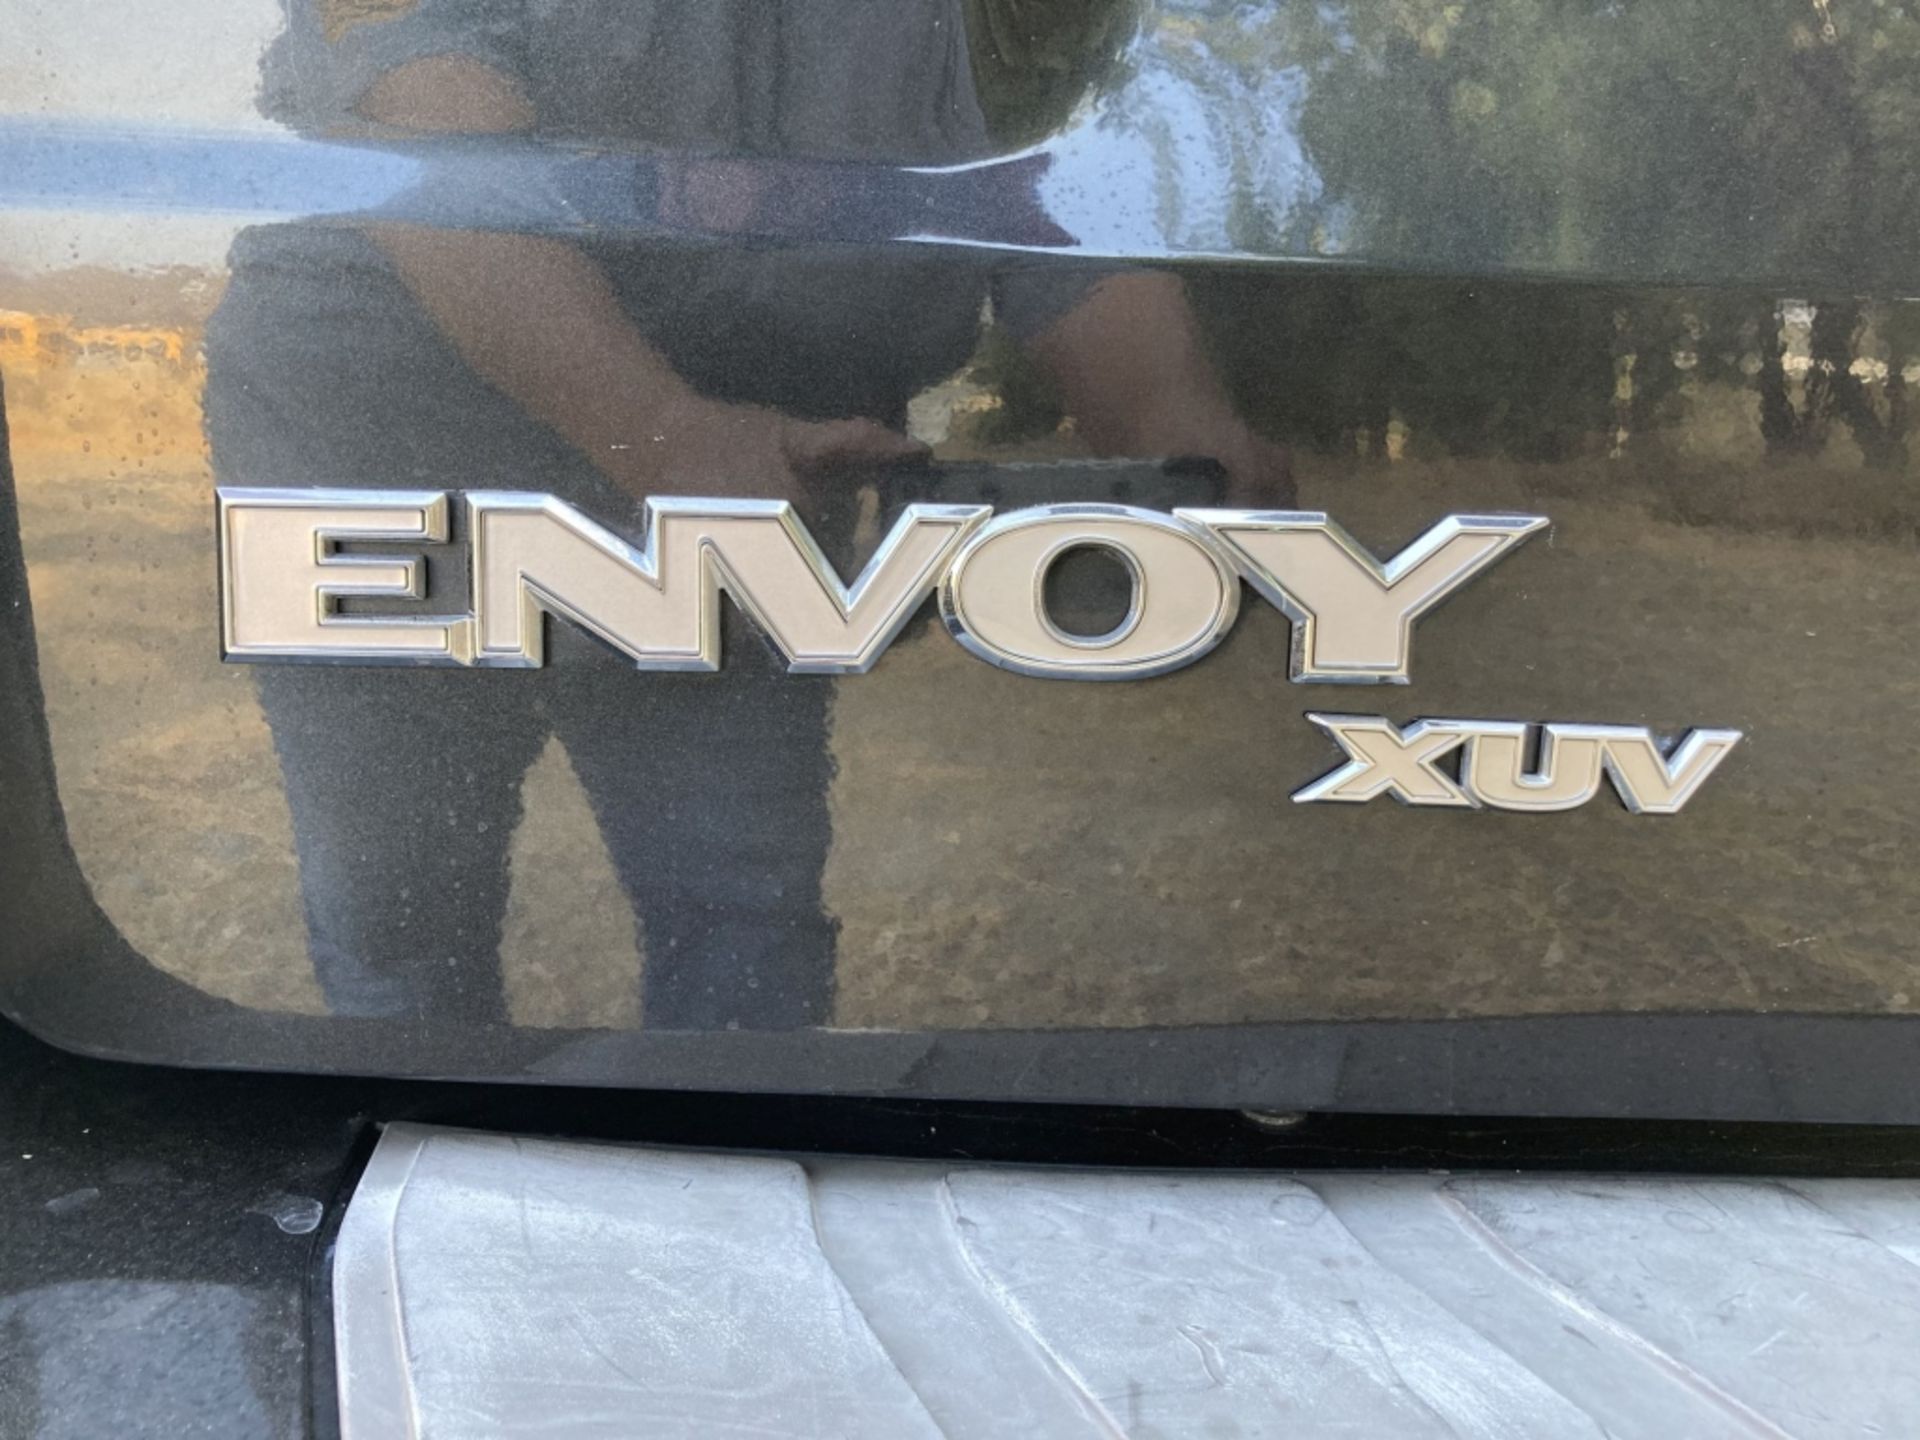 GMC Envoy SLT XUV / Pickup, - Image 20 of 22